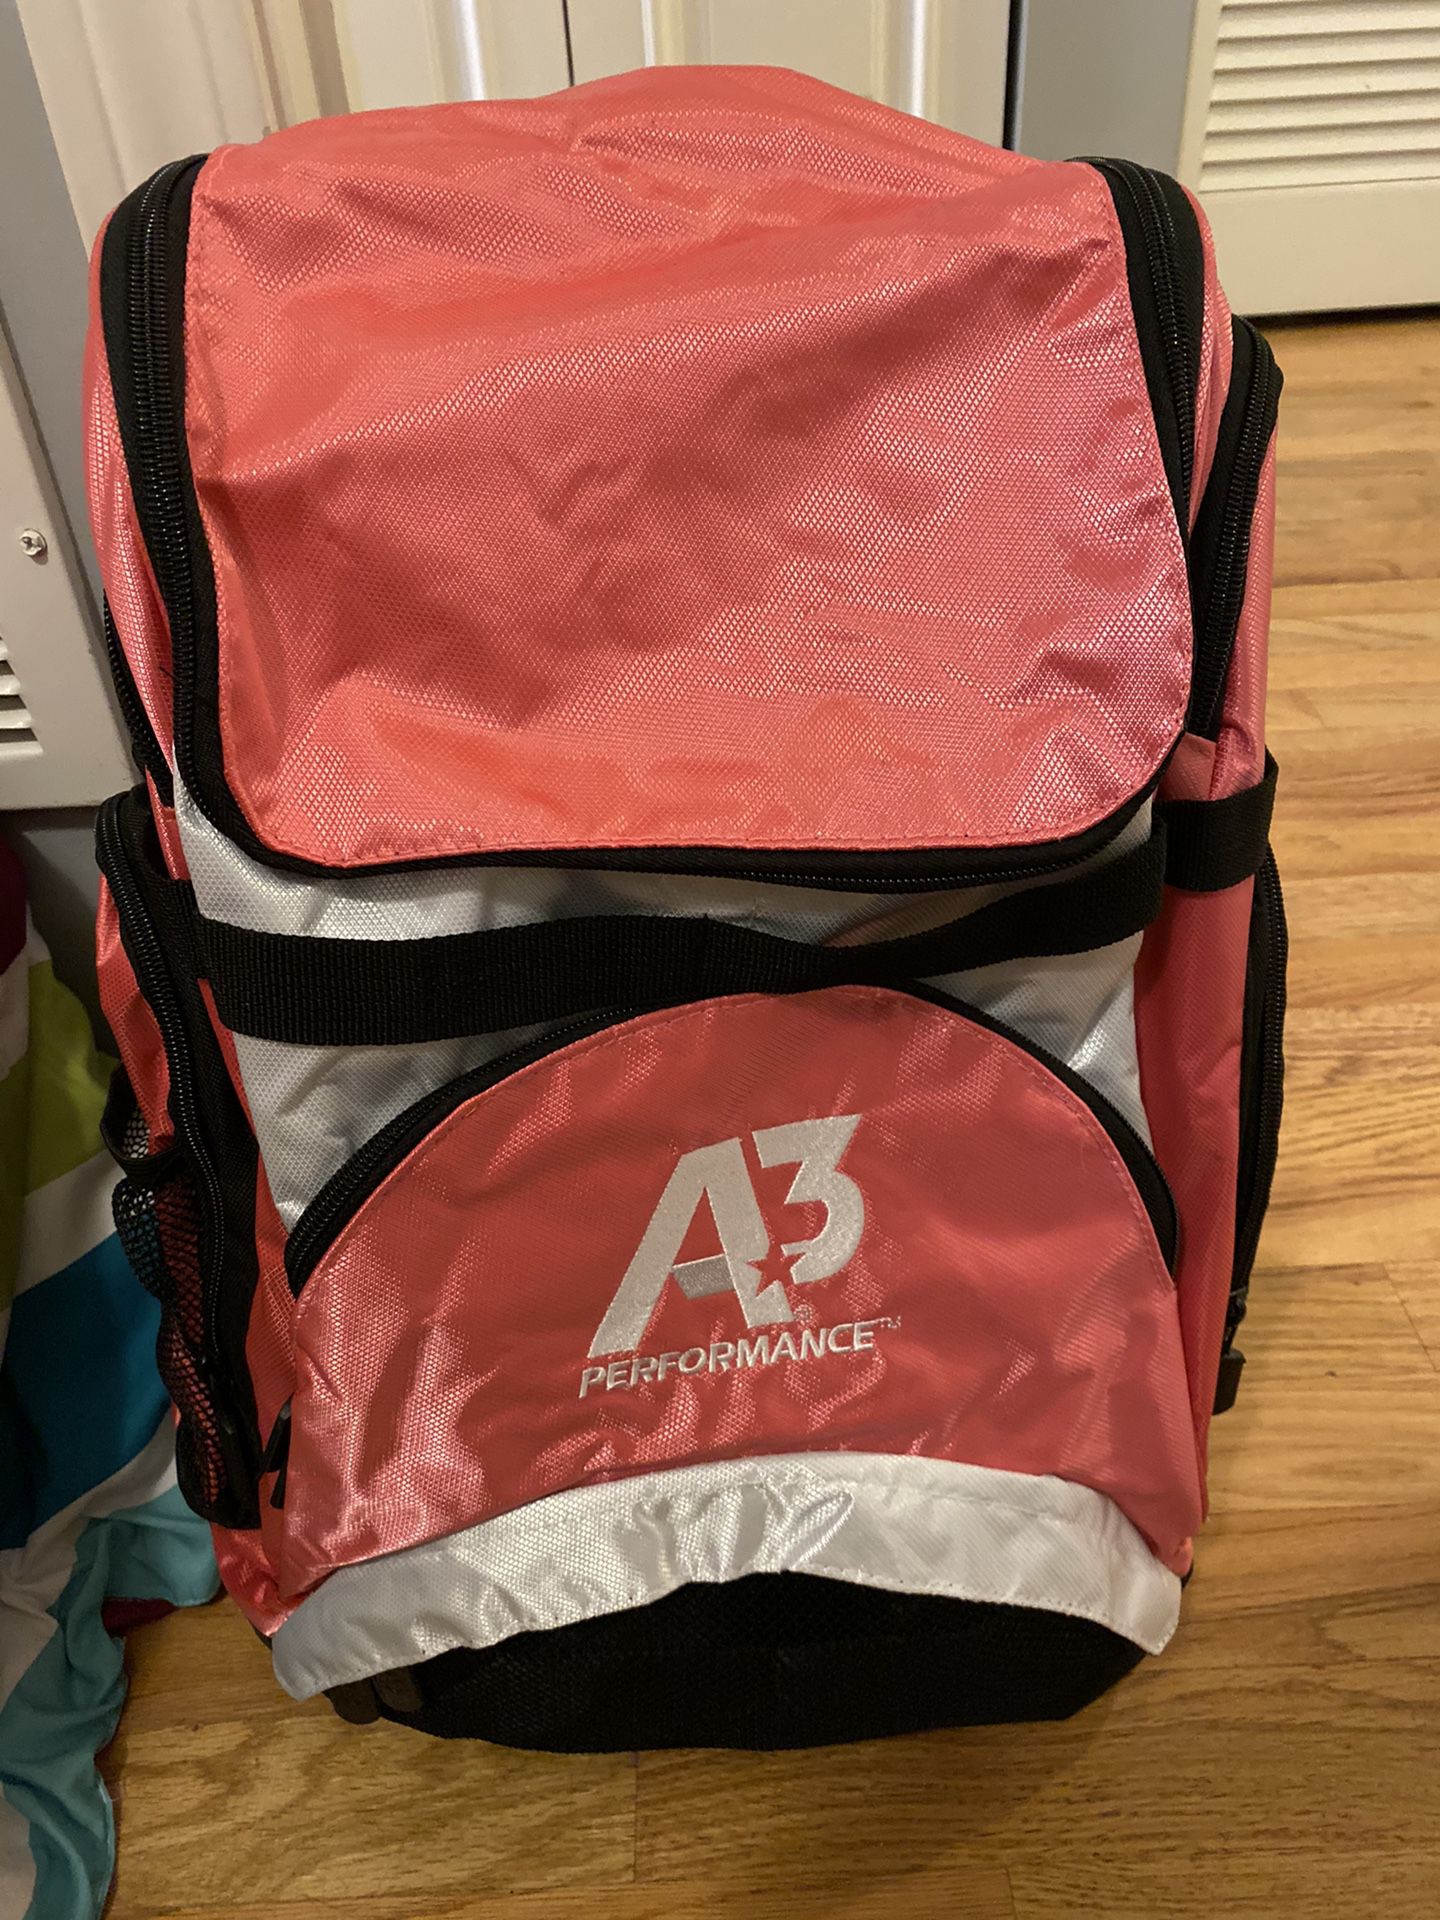 A3 Performance Swim Backpack